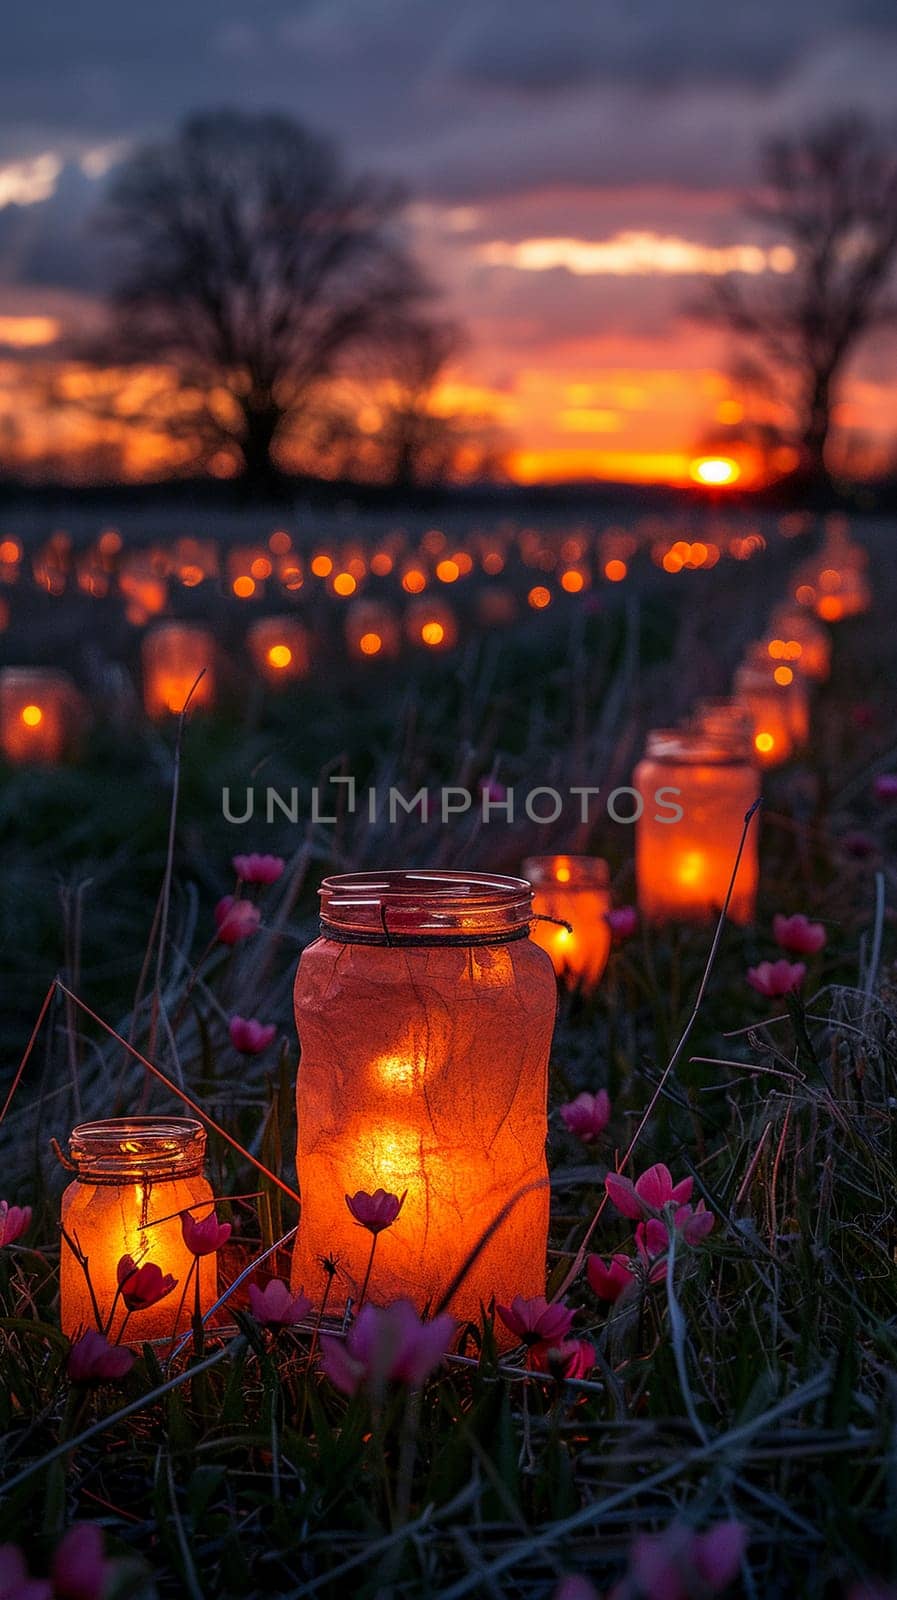 Field of solar lights or lanterns illuminating at dusk by Benzoix